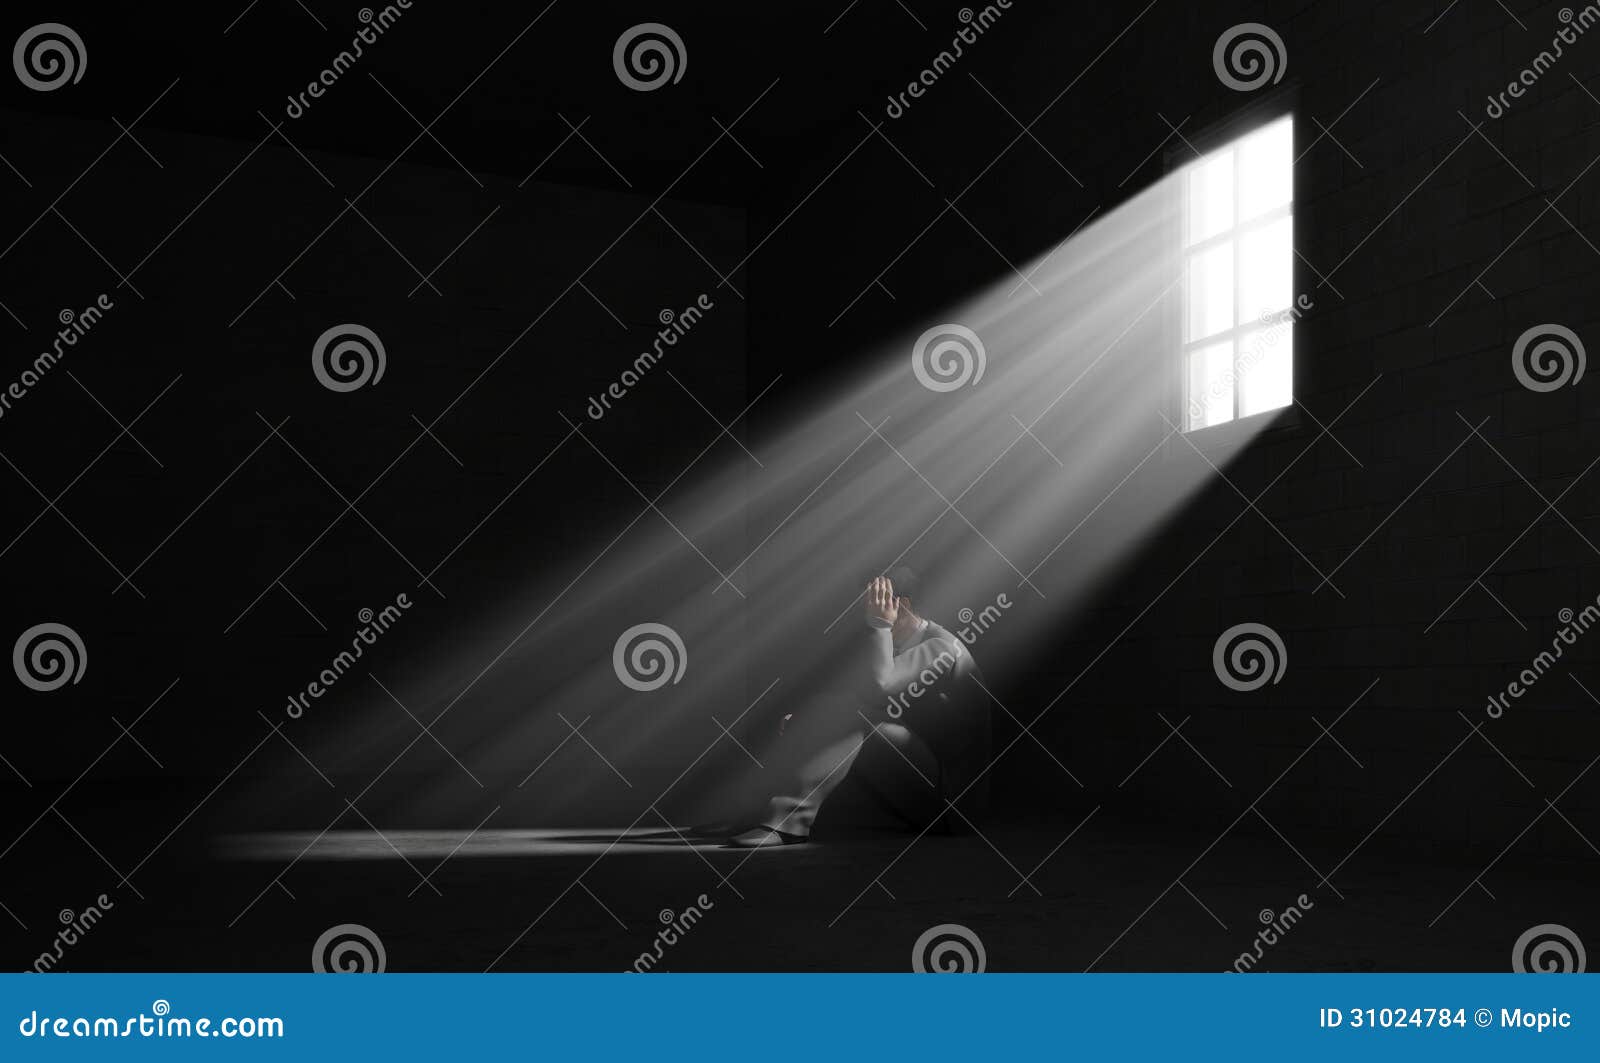 Lonely Man In A Dark Room Stock Photography | CartoonDealer.com #31024784